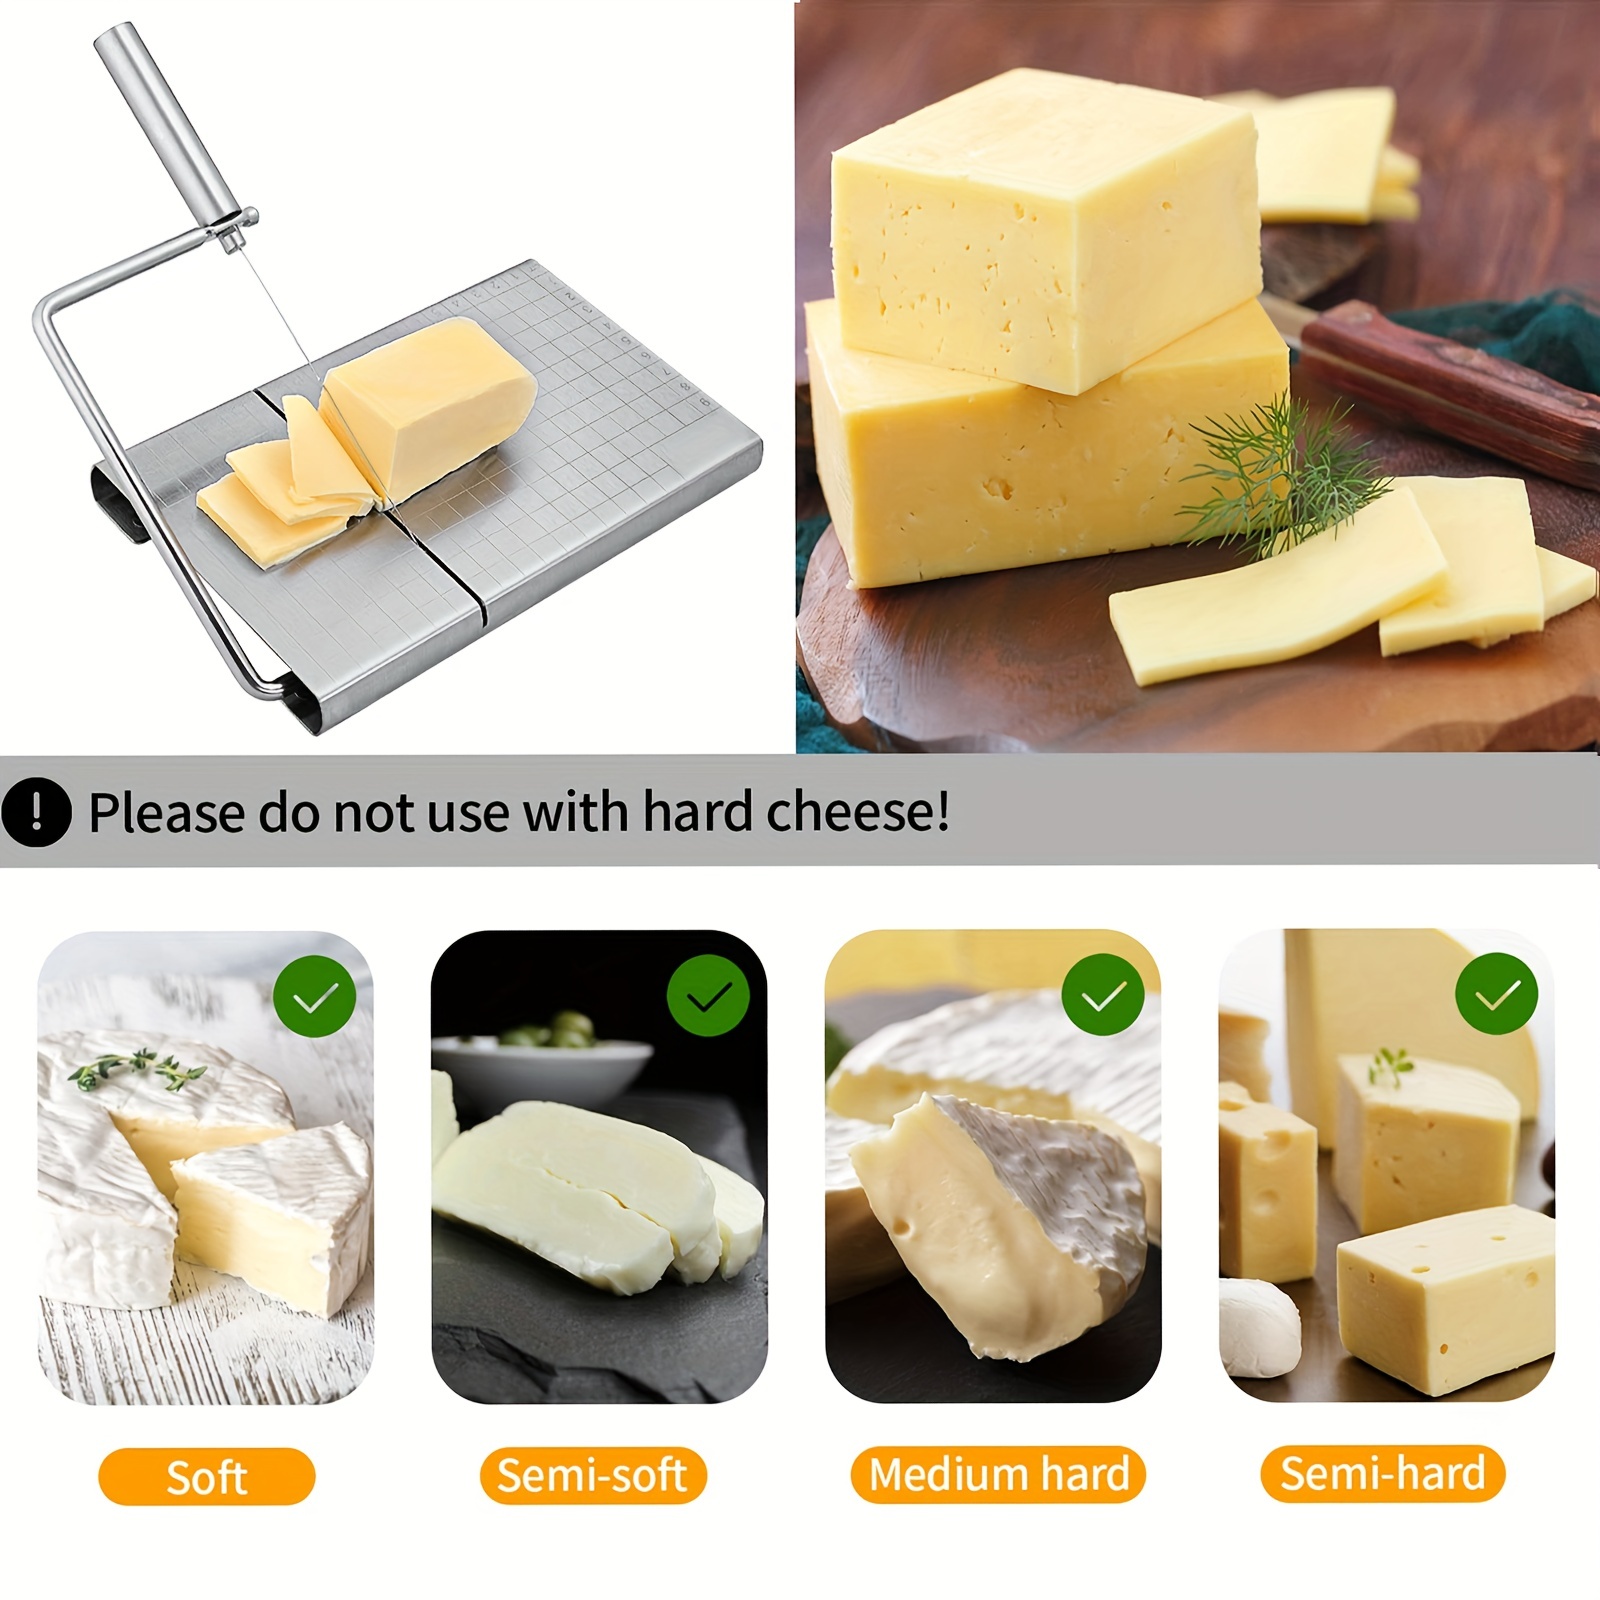  Rebanadora de queso con alambre ajustable, rebanadora